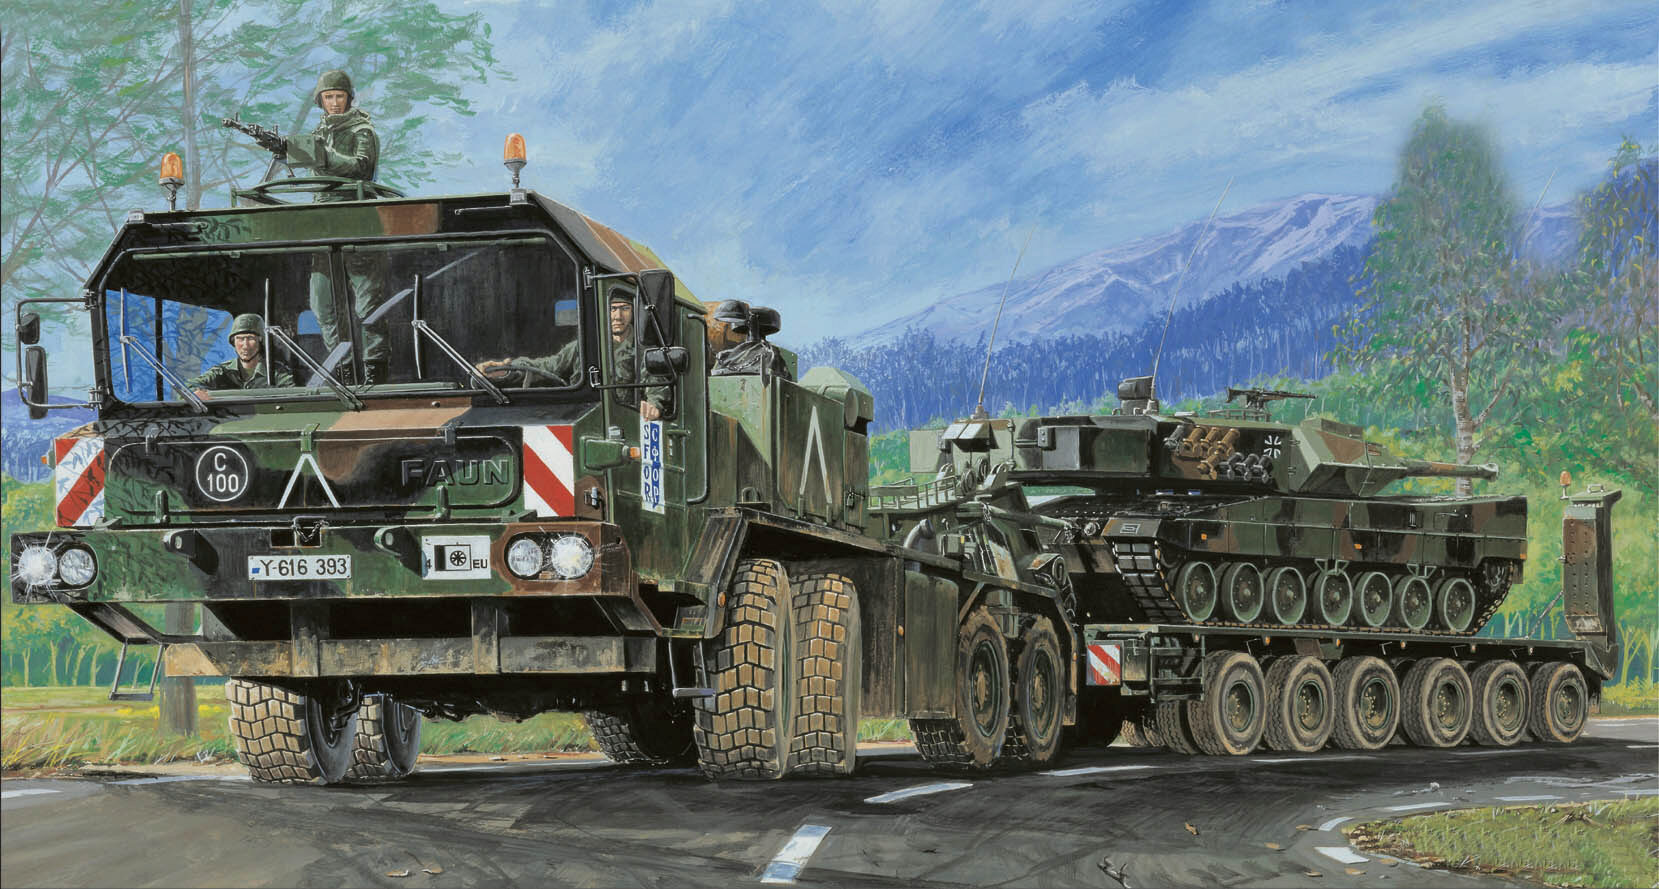 Trumpeter  00203 1/35 FAUN SLT-56 Panzer-Trans